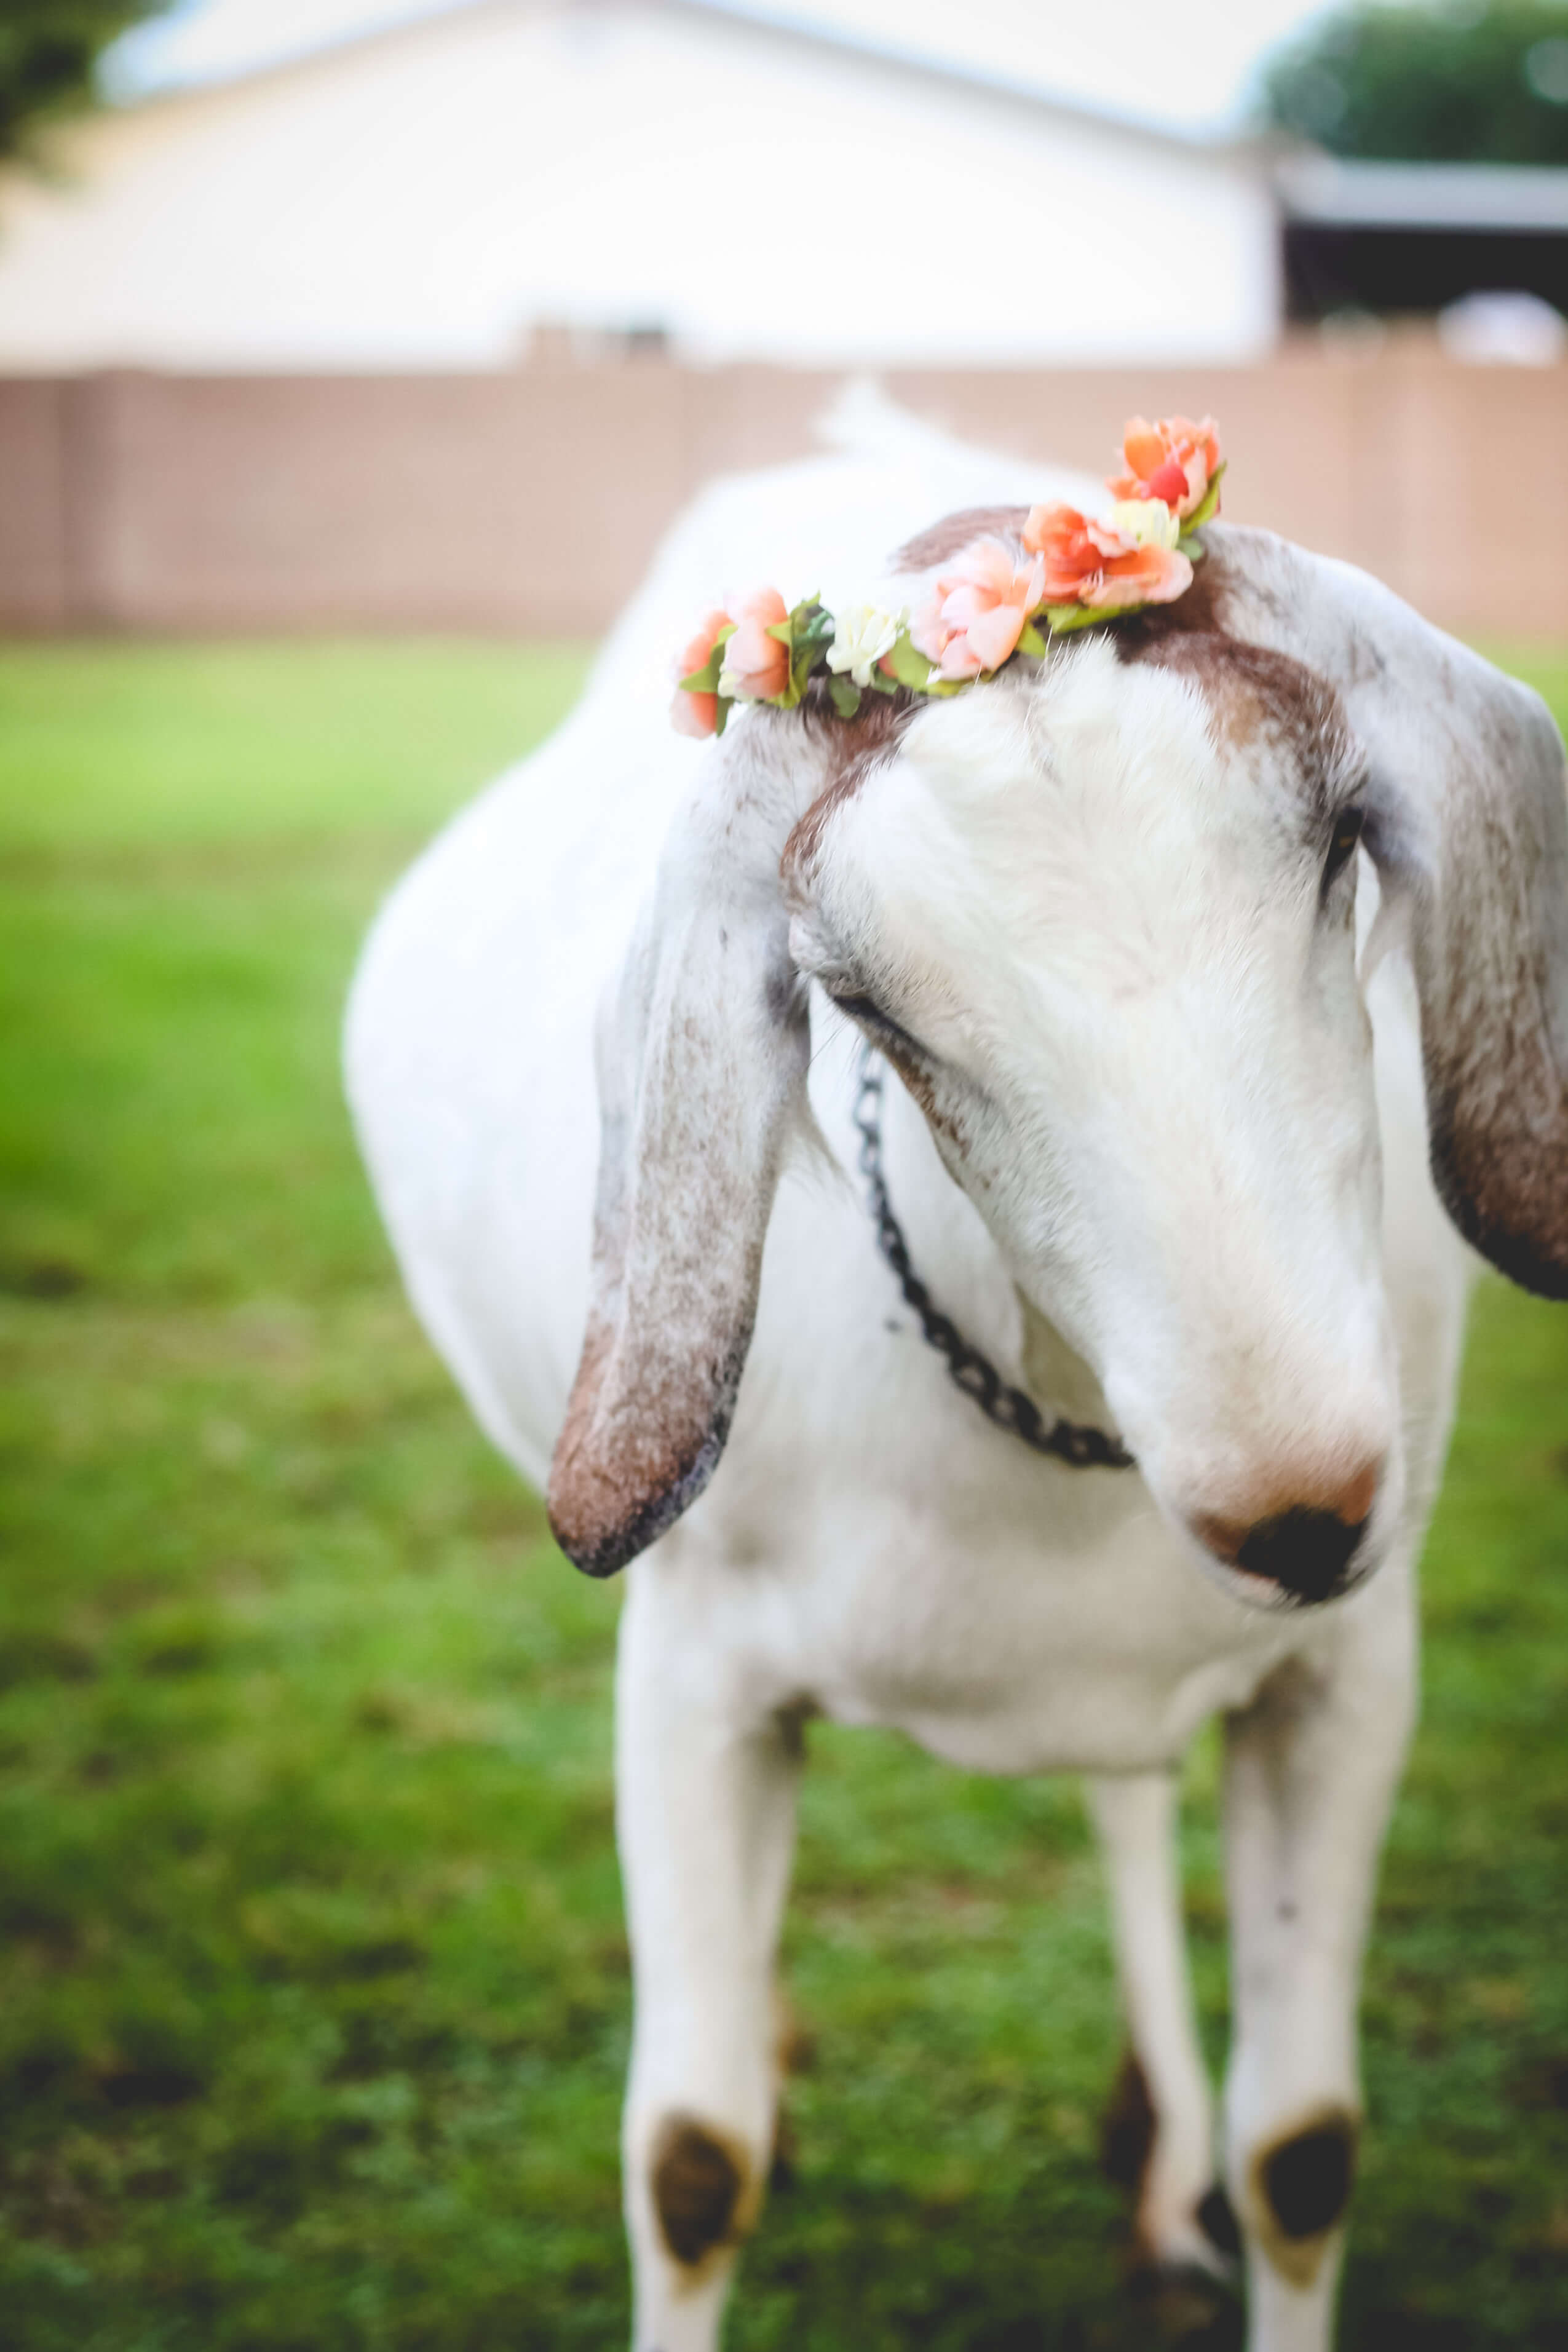 Urban farming - Goat with Flower Tira